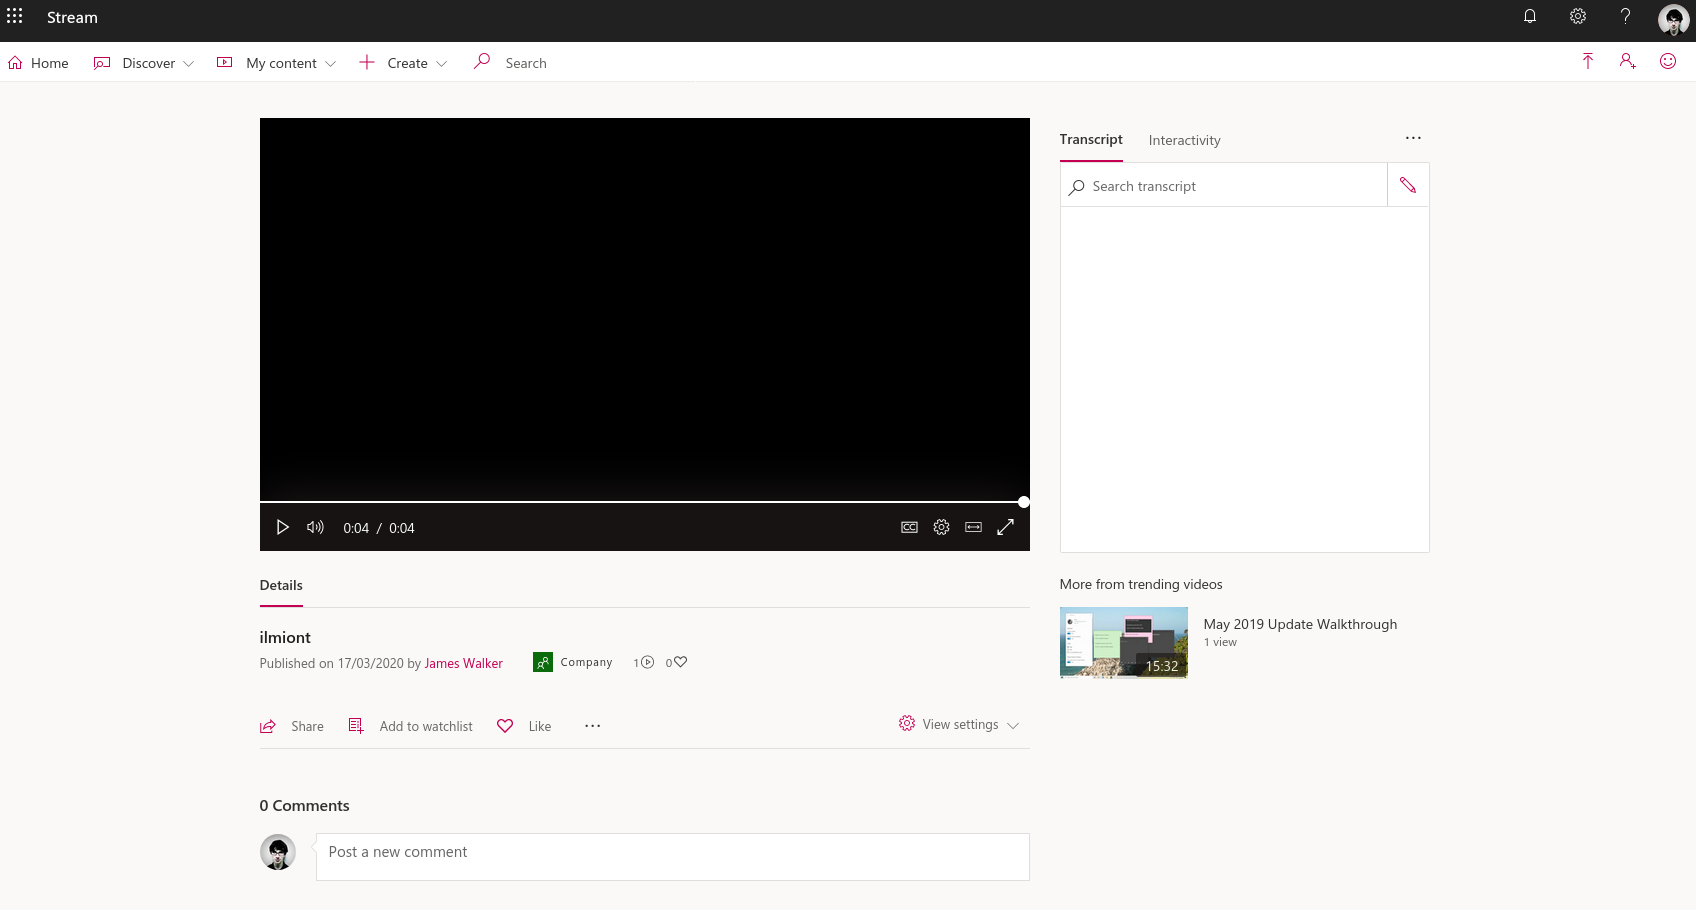 Screenshot of sharing videos using Microsoft Stream